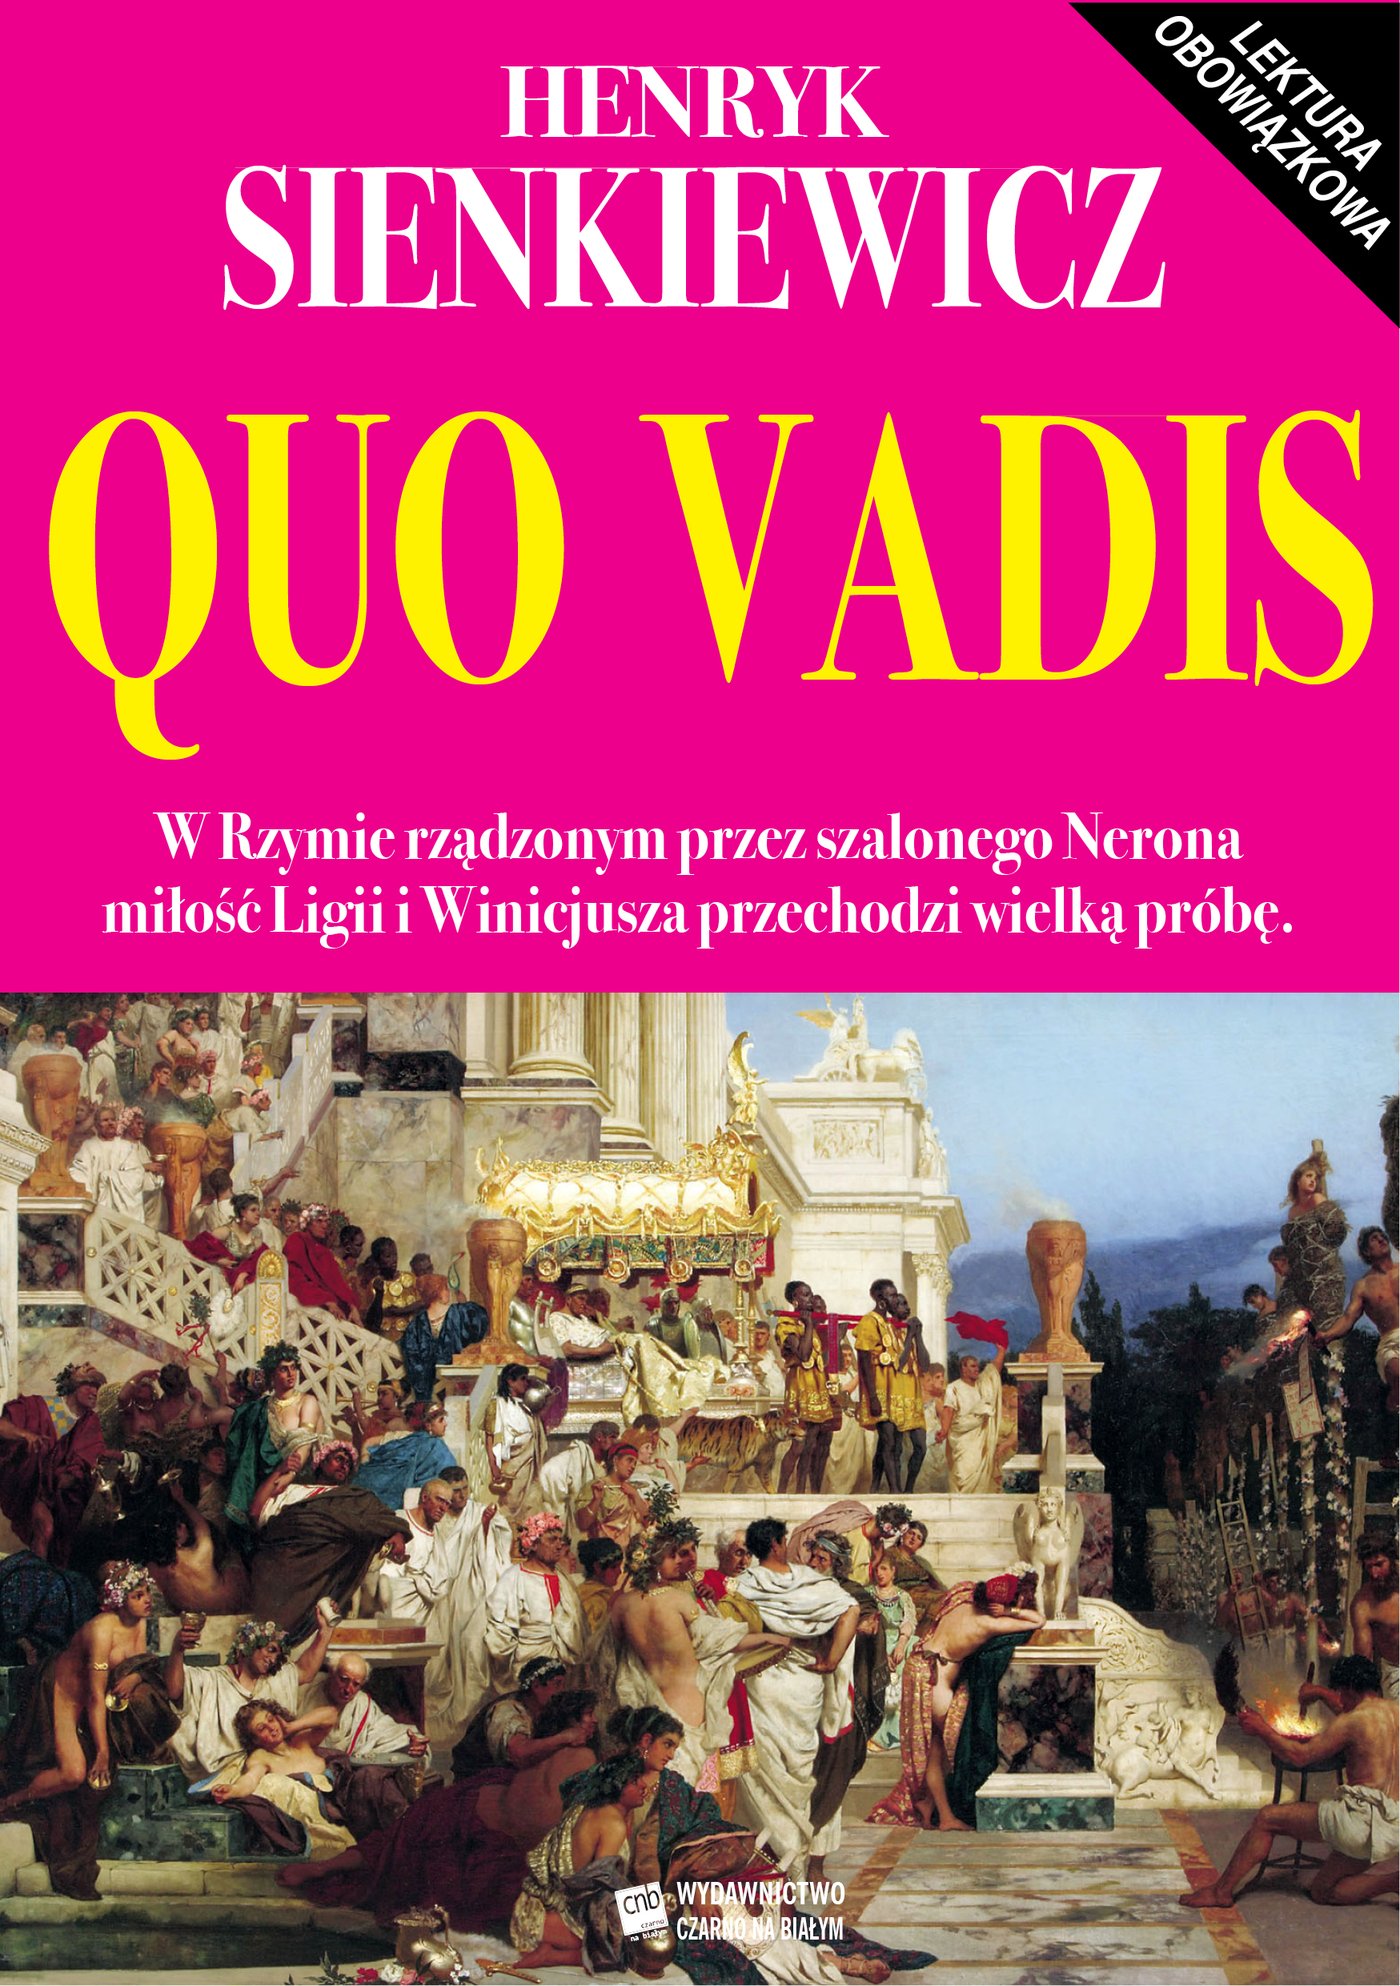 Quo Vadis by Henryk Sienkiewicz - Audiobook 